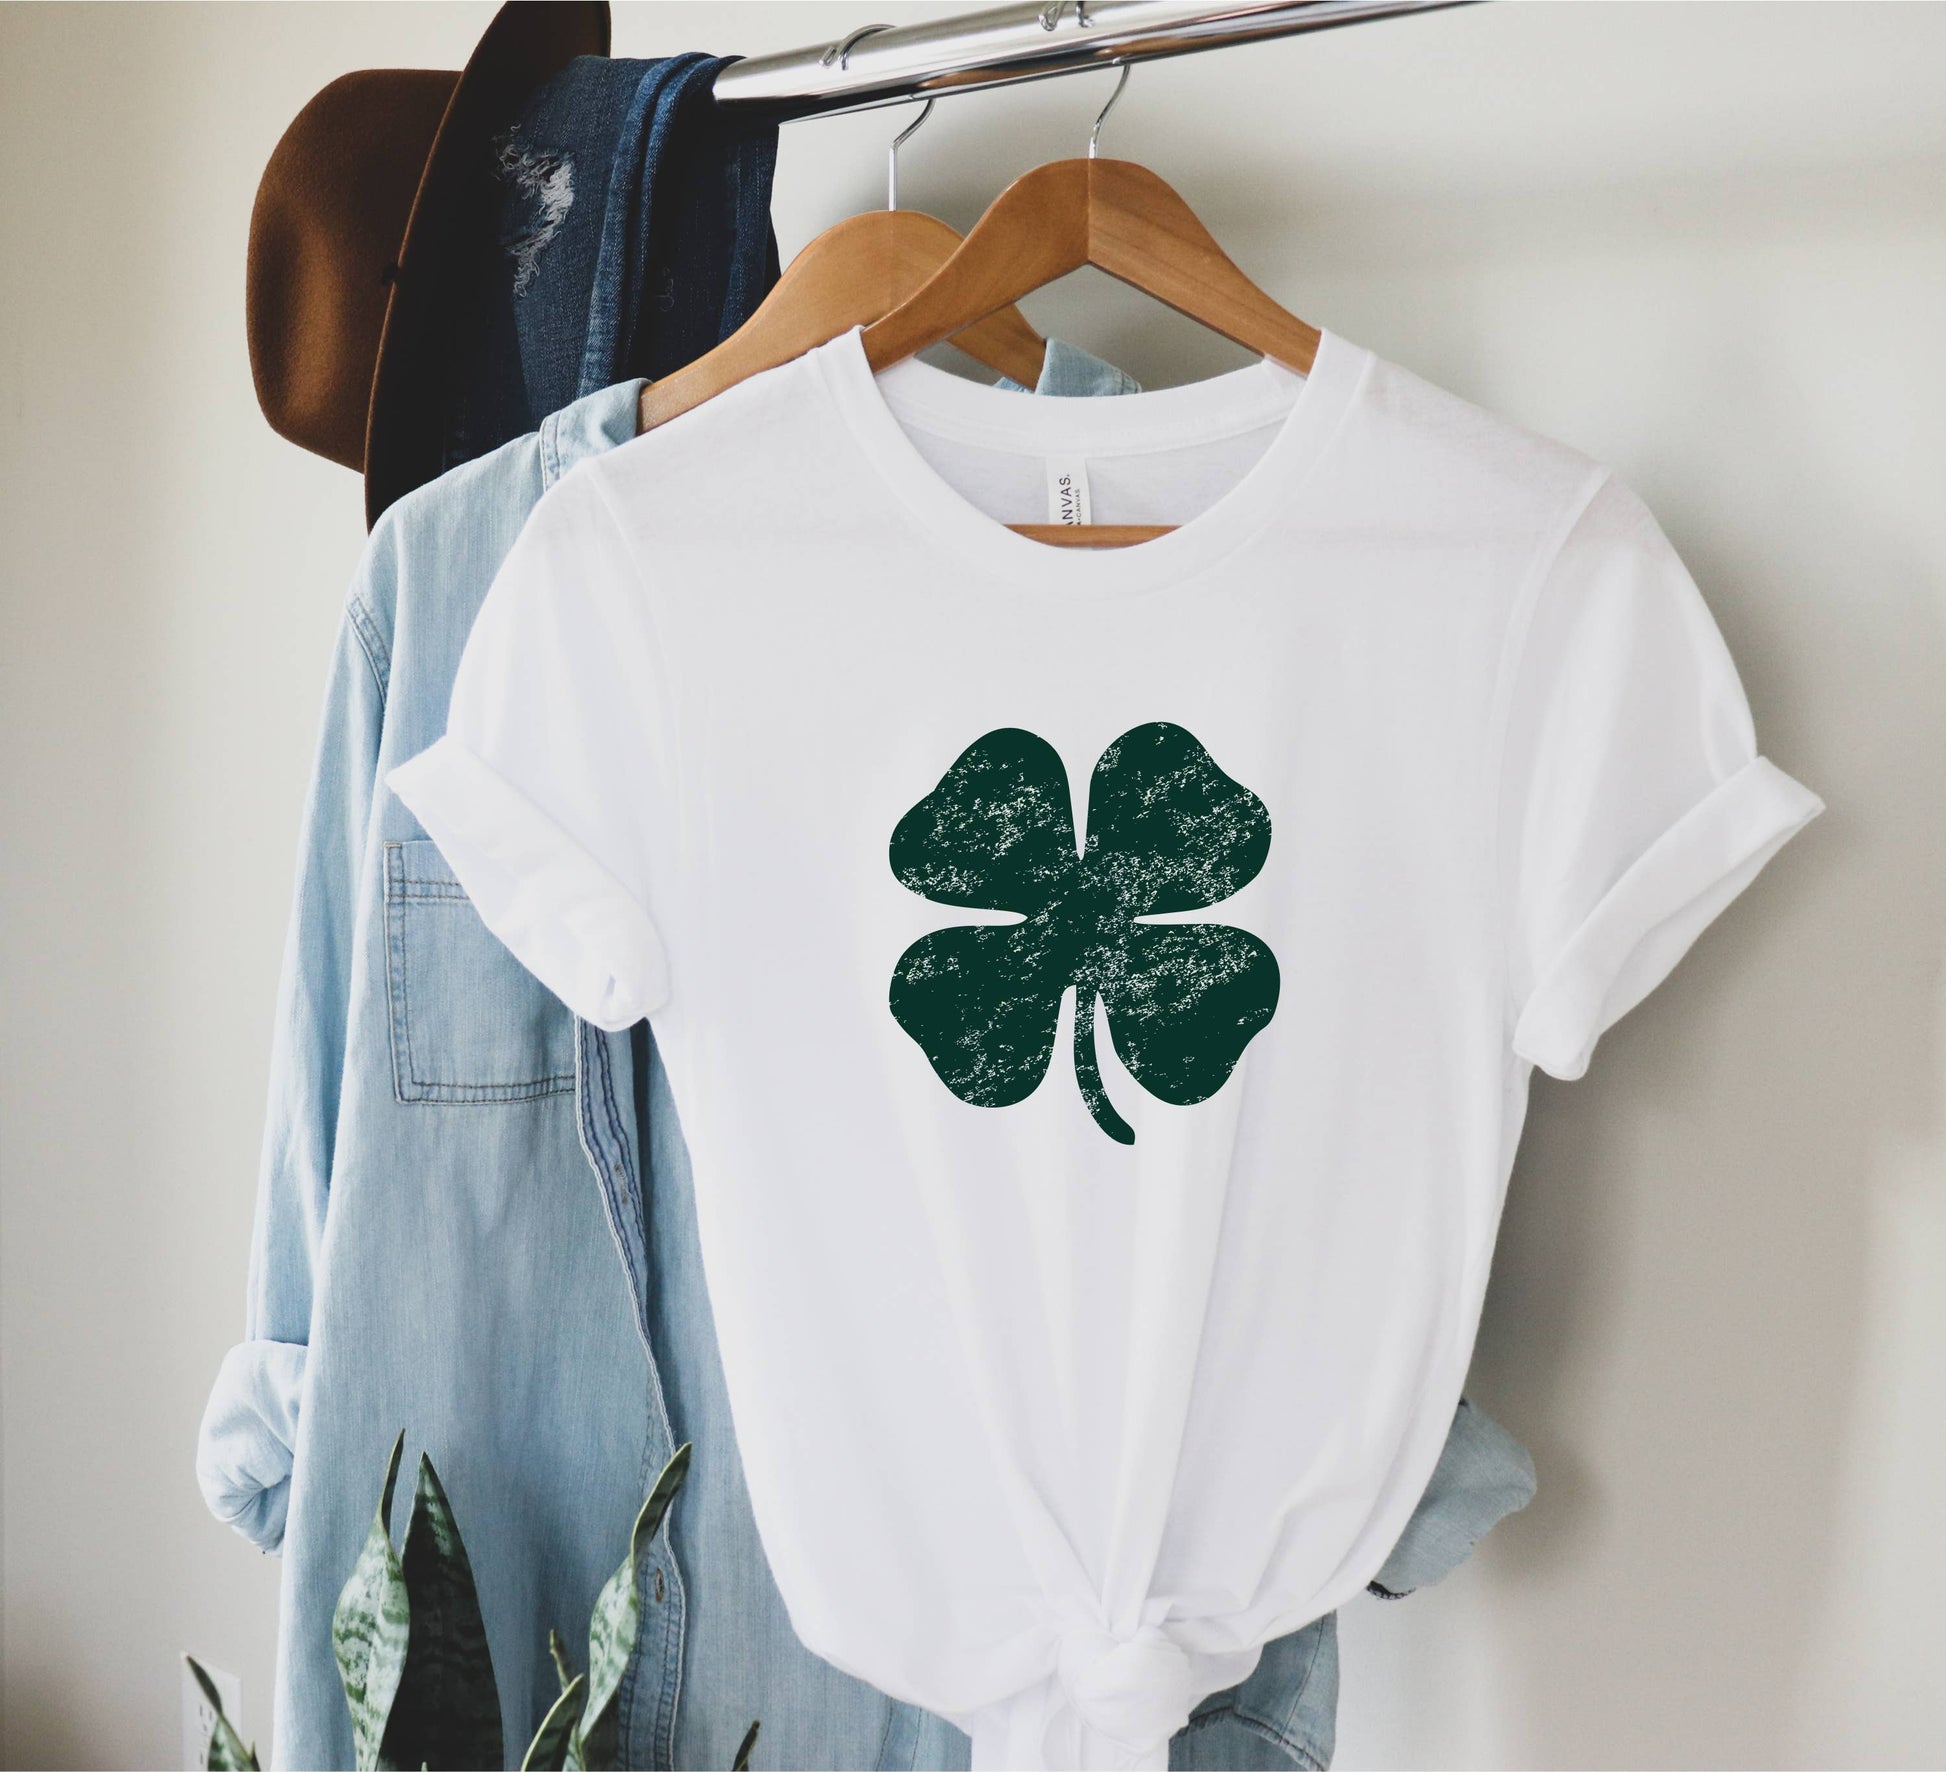 St. Patrick's Day Shirt - St. Patty's Day Shirt - Shamrock - Whimsical Details